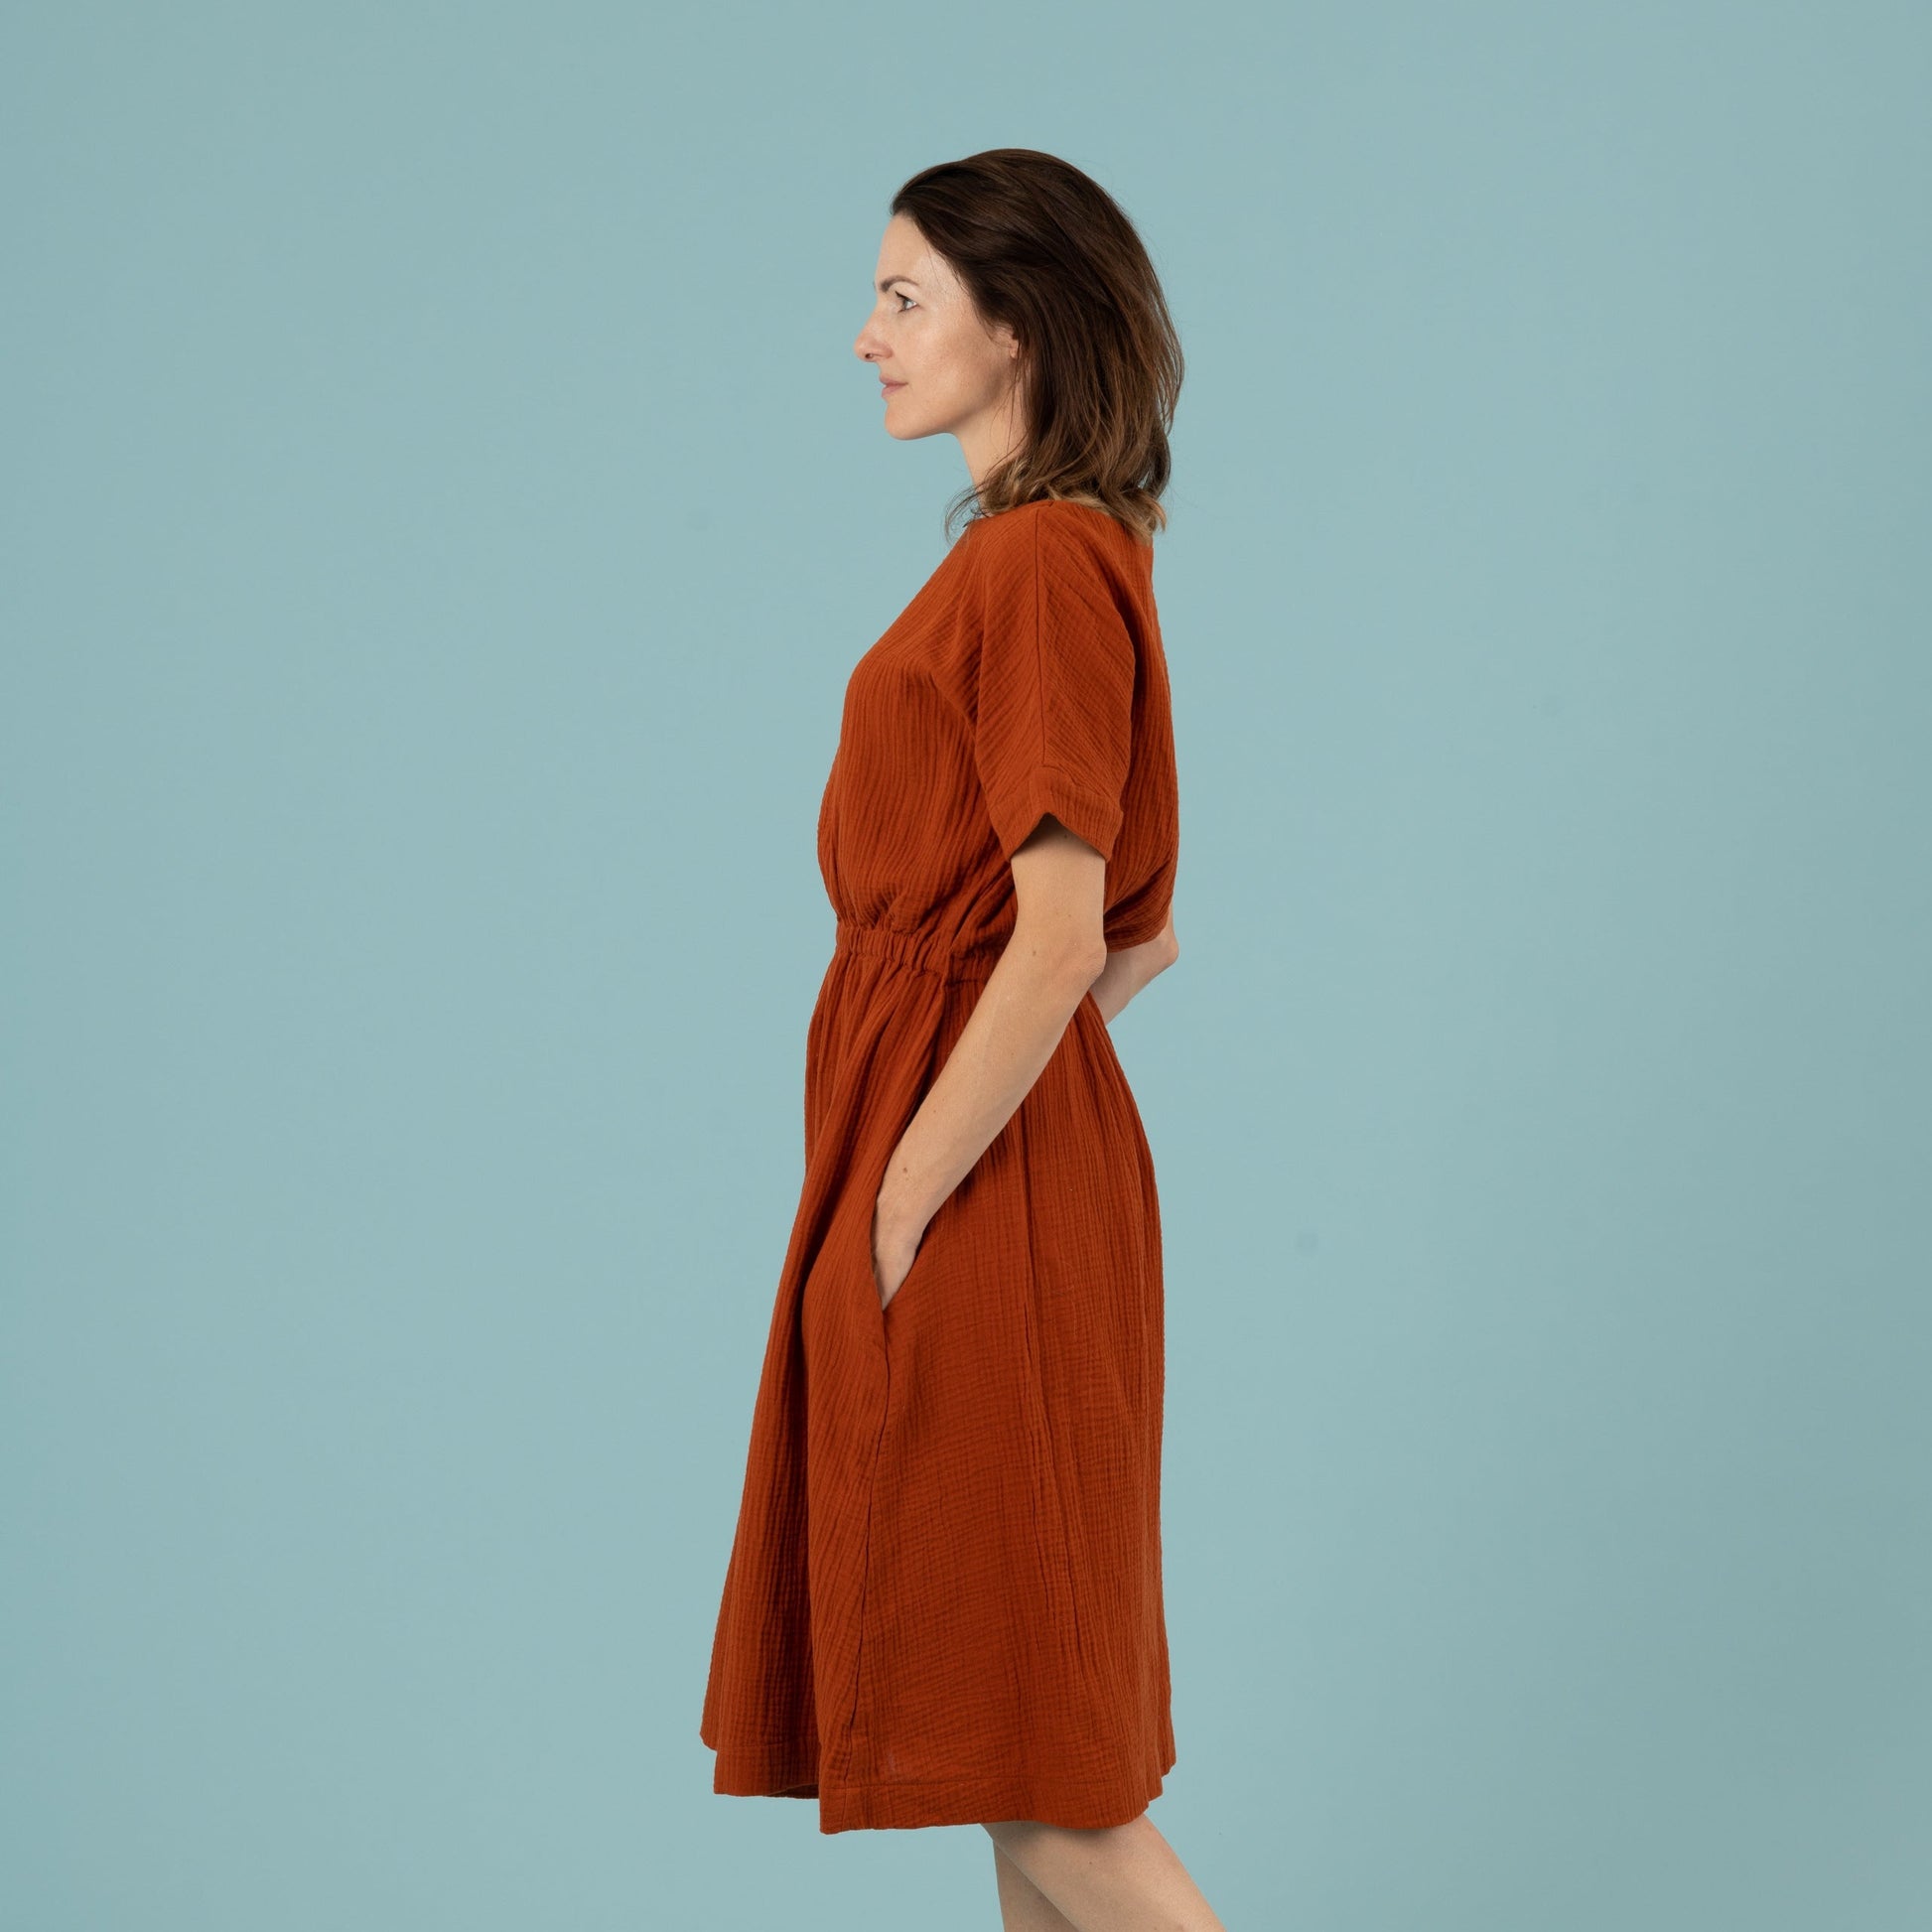 MILA Damenkleid Musselin Terracotta Seitenansicht links, Urheber: Mini & Eve